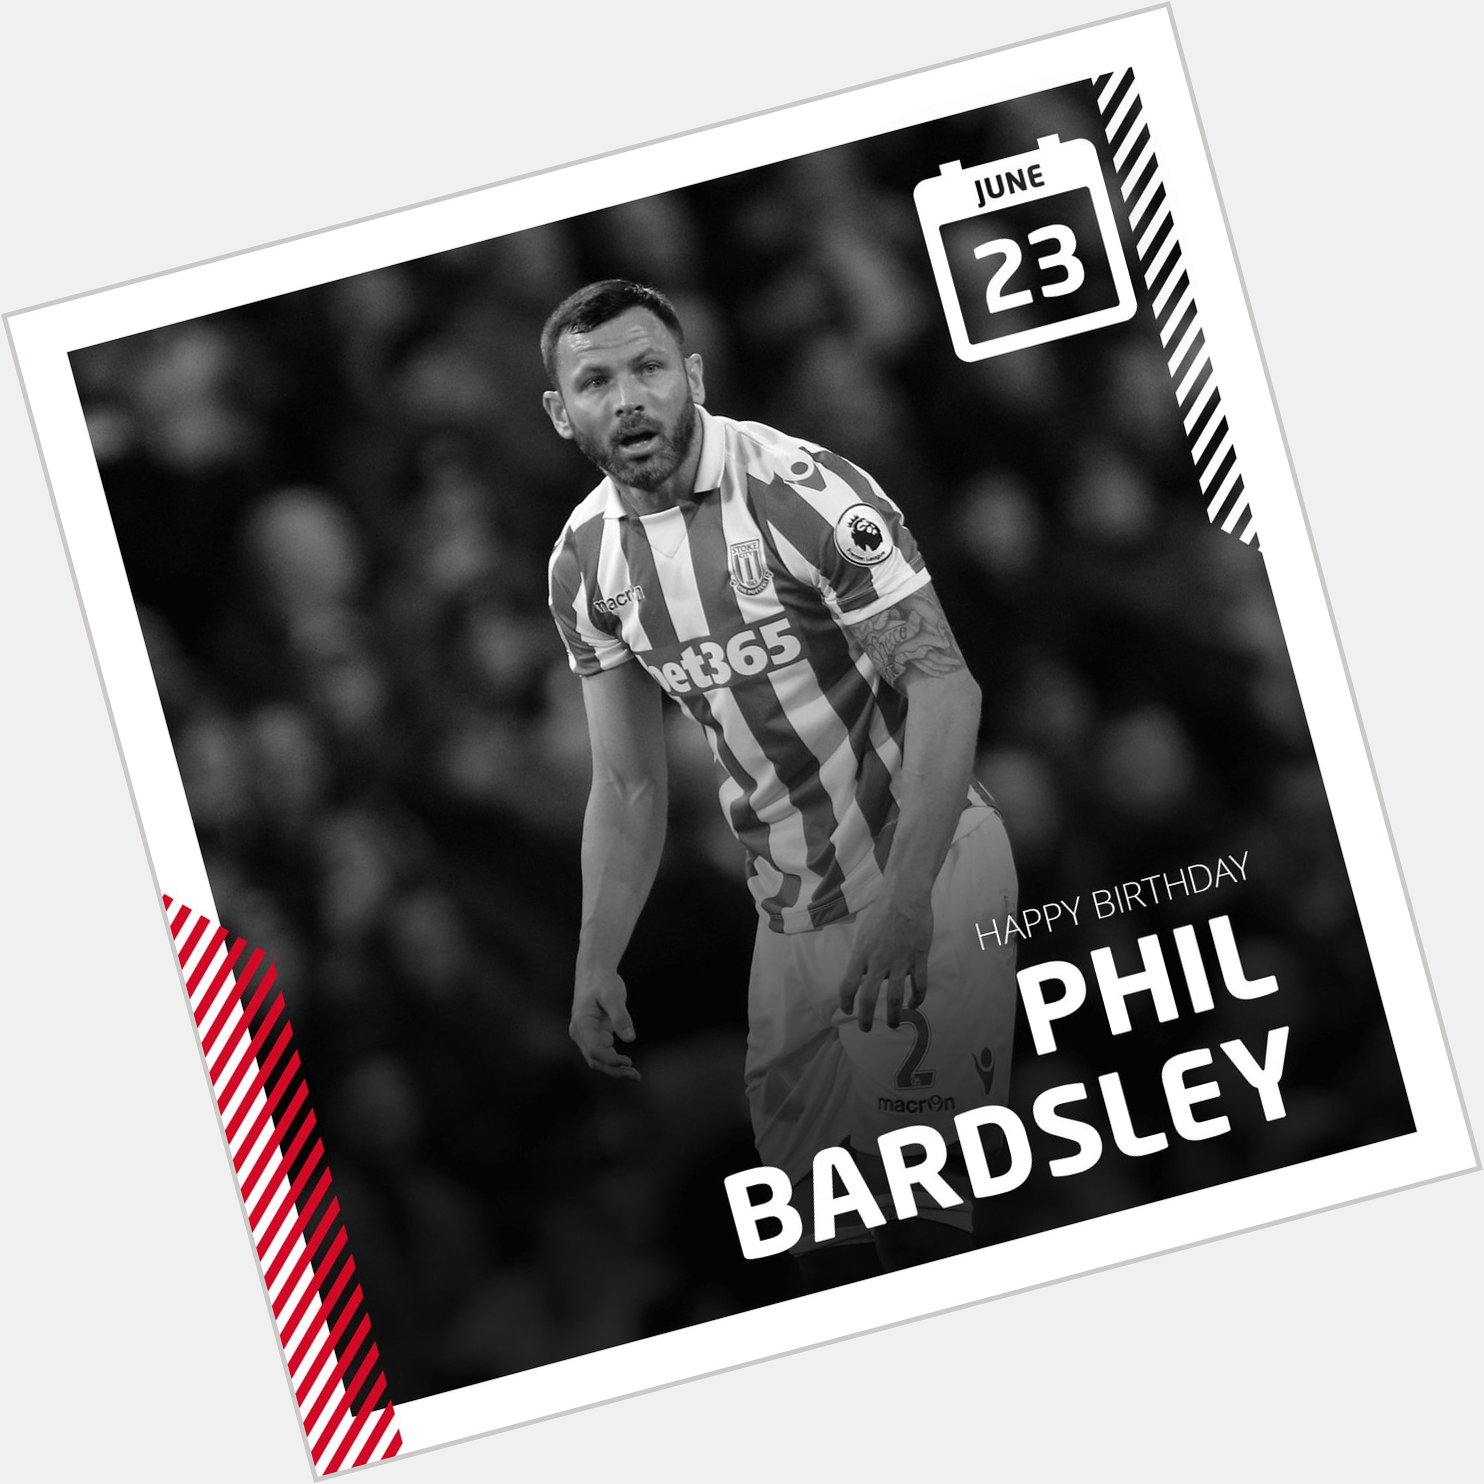  Happy Birthday to former Stoke City defender, Phil Bardsley who turns 33 today.    